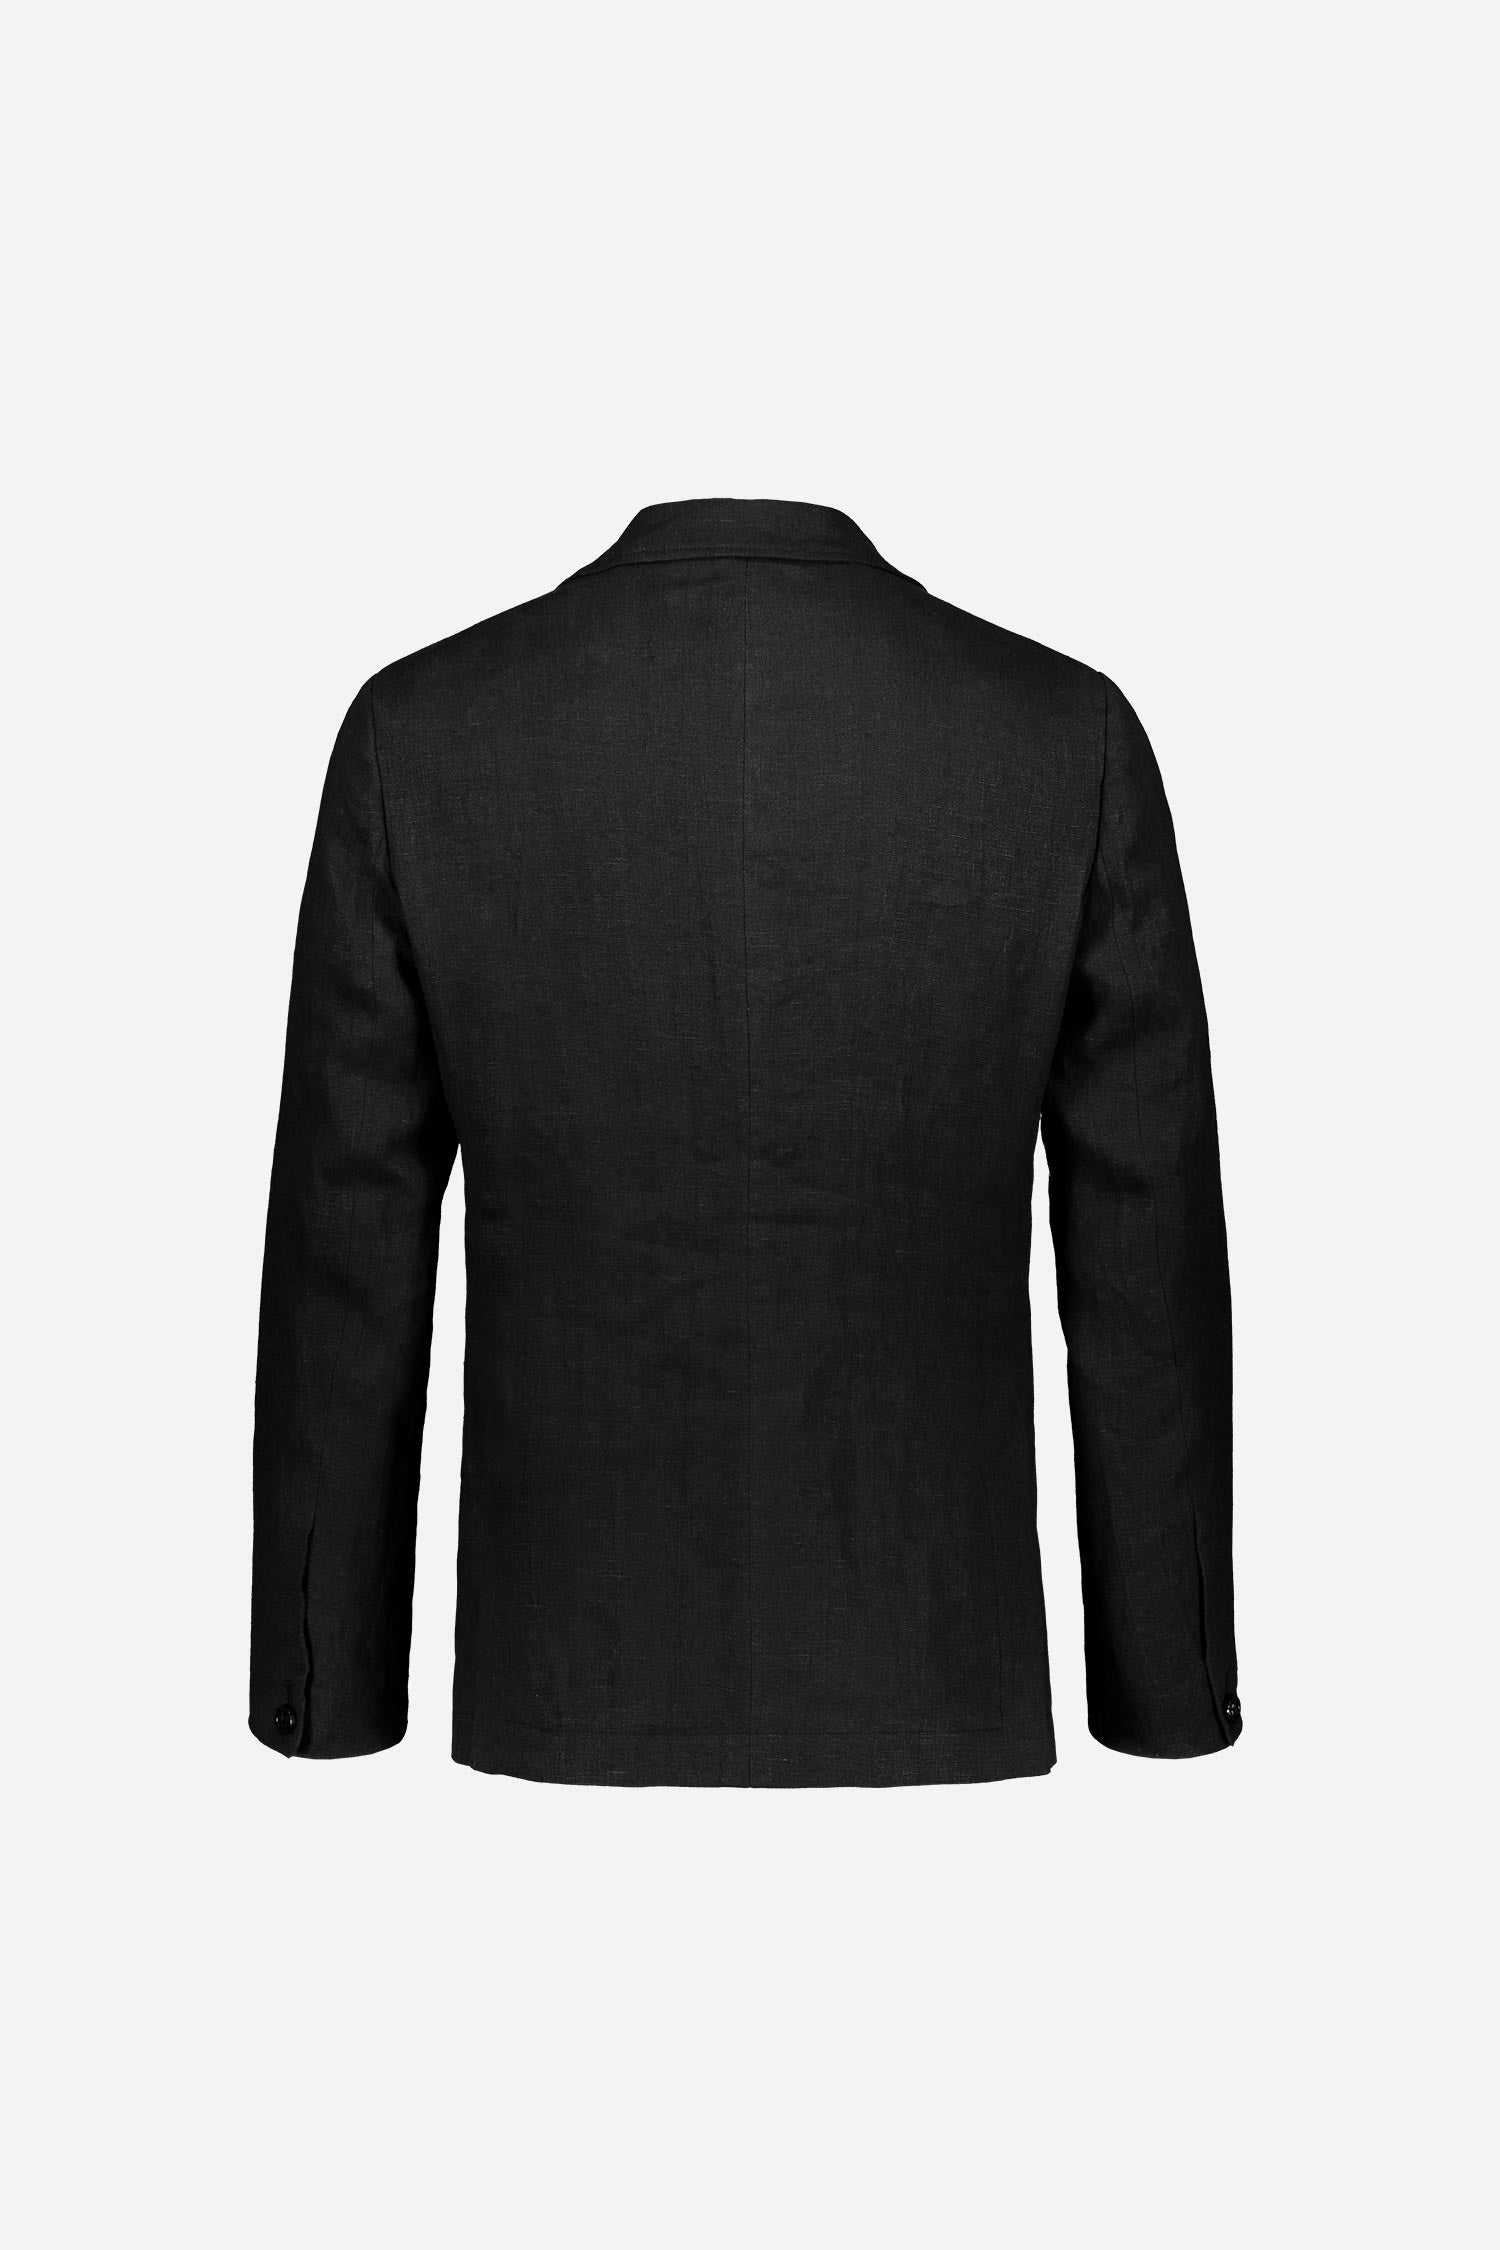 FRENN Jere linen jacket black